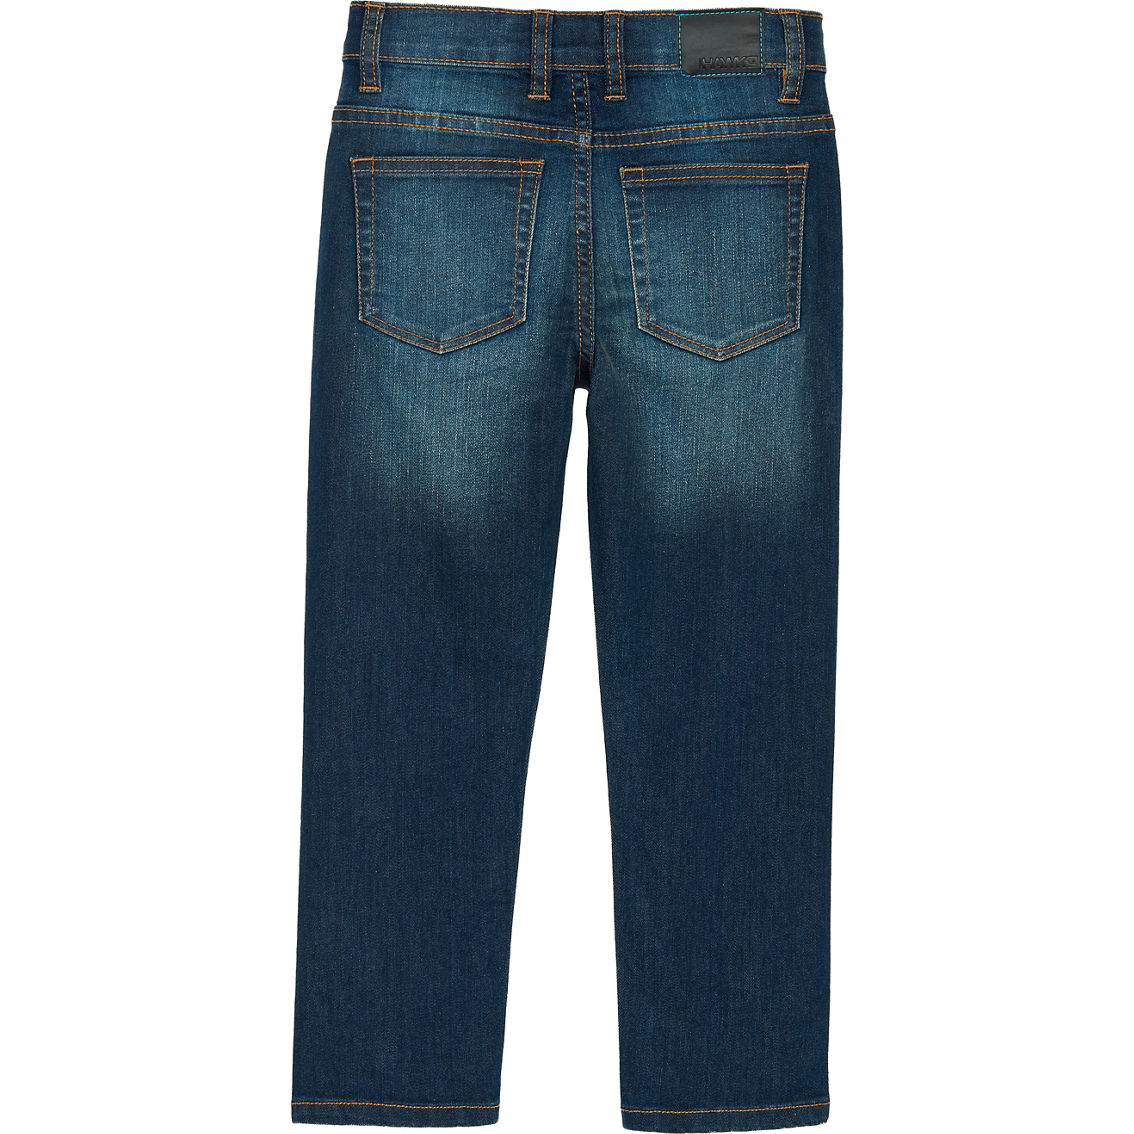 Tony Hawk Boys Denim Jeans - Image 2 of 2